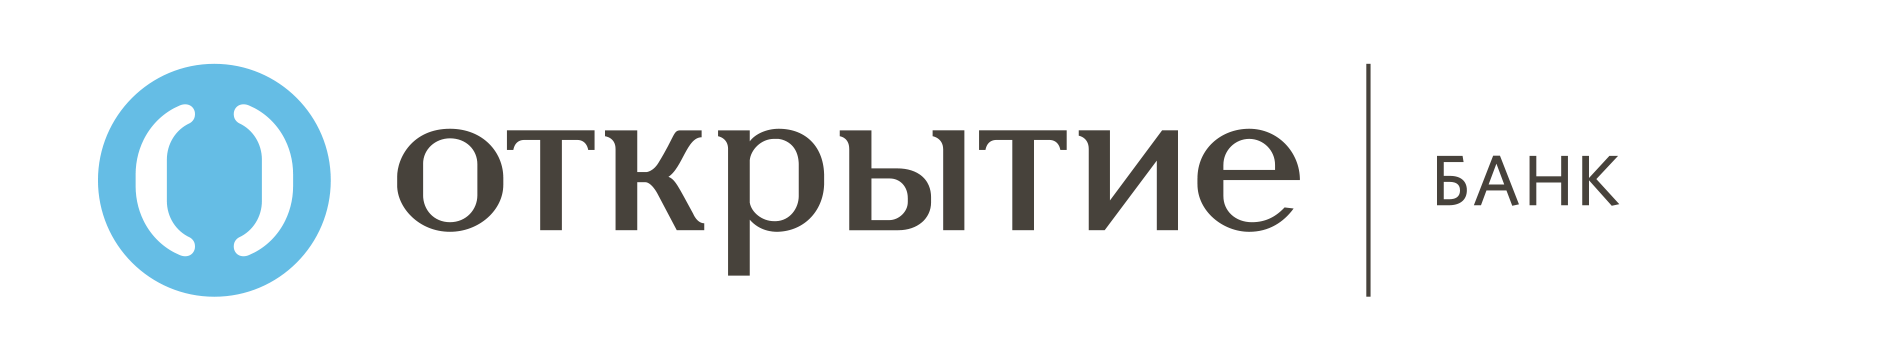 Otkritie FC Bank Brand Logo